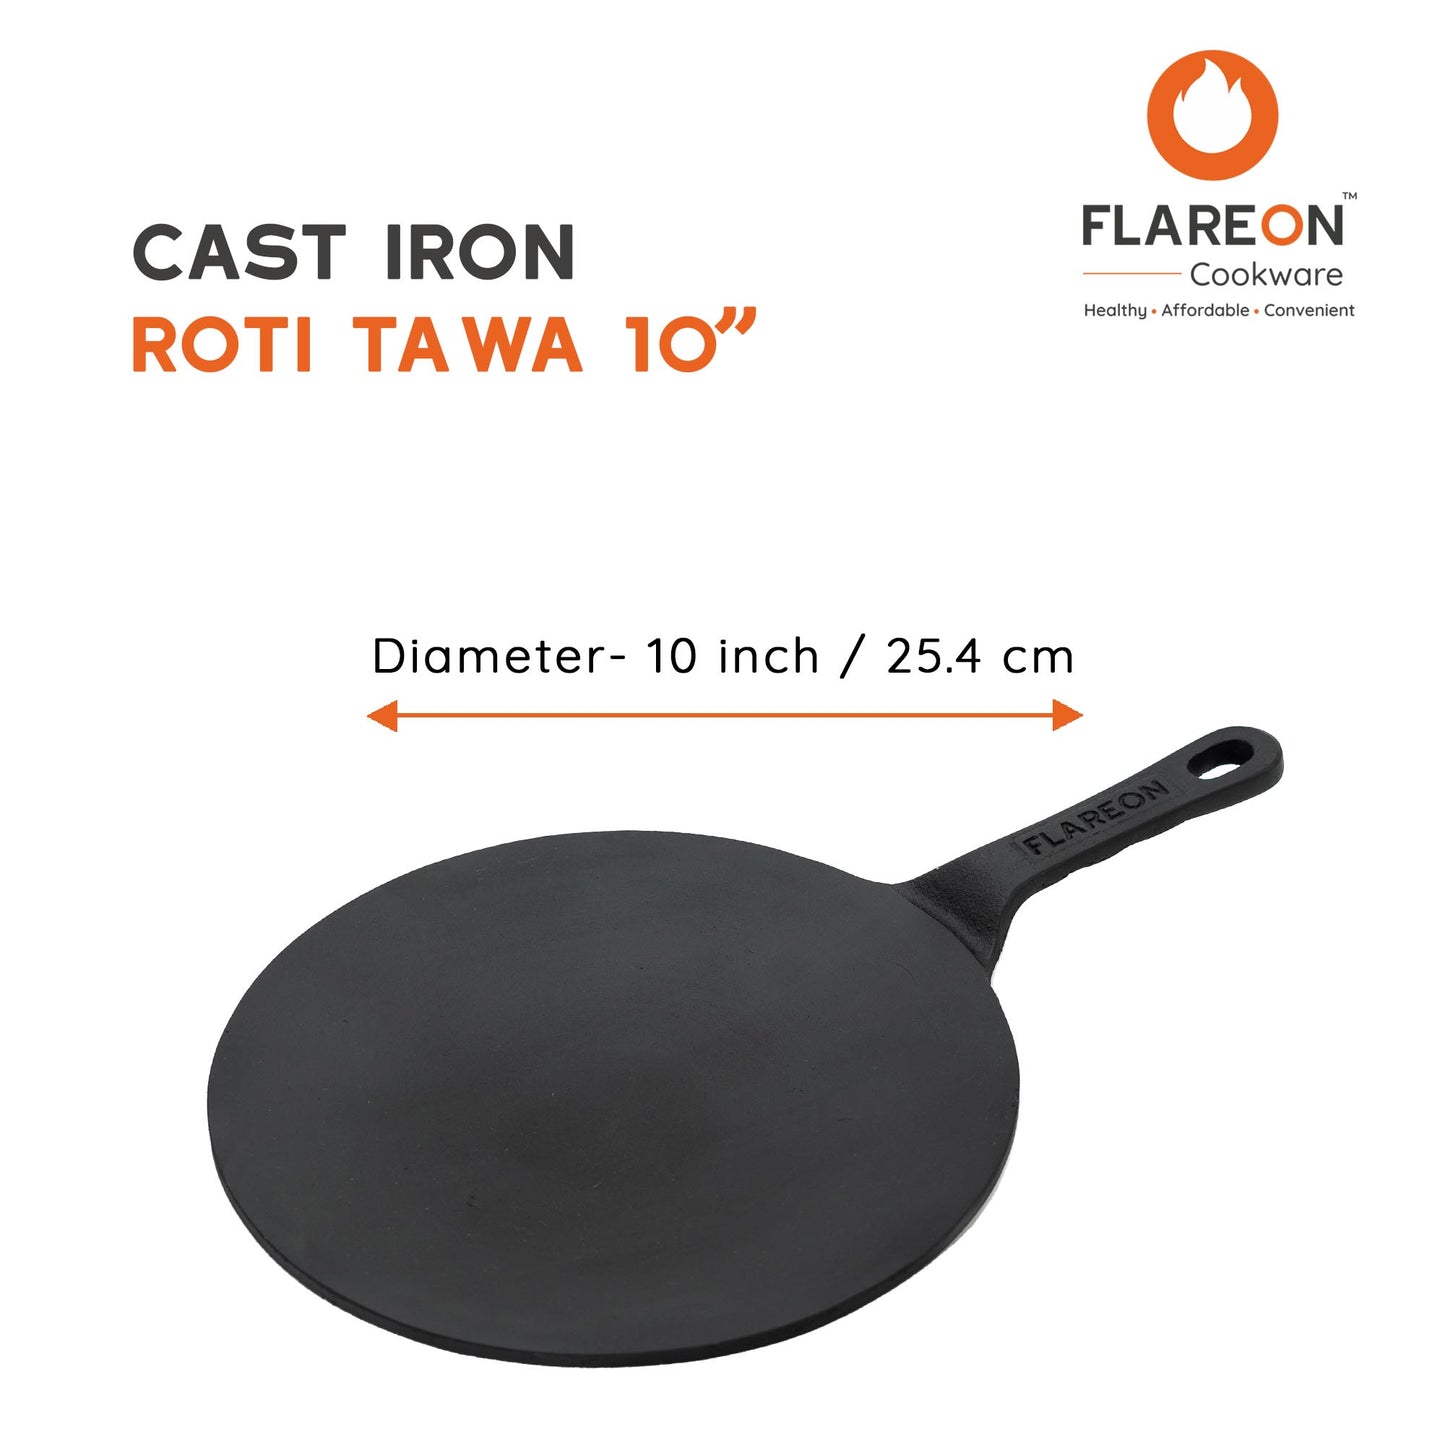 FlareOn's Cast Iron Roti Tawa Long Handle 10 Inch- Product Dimensions